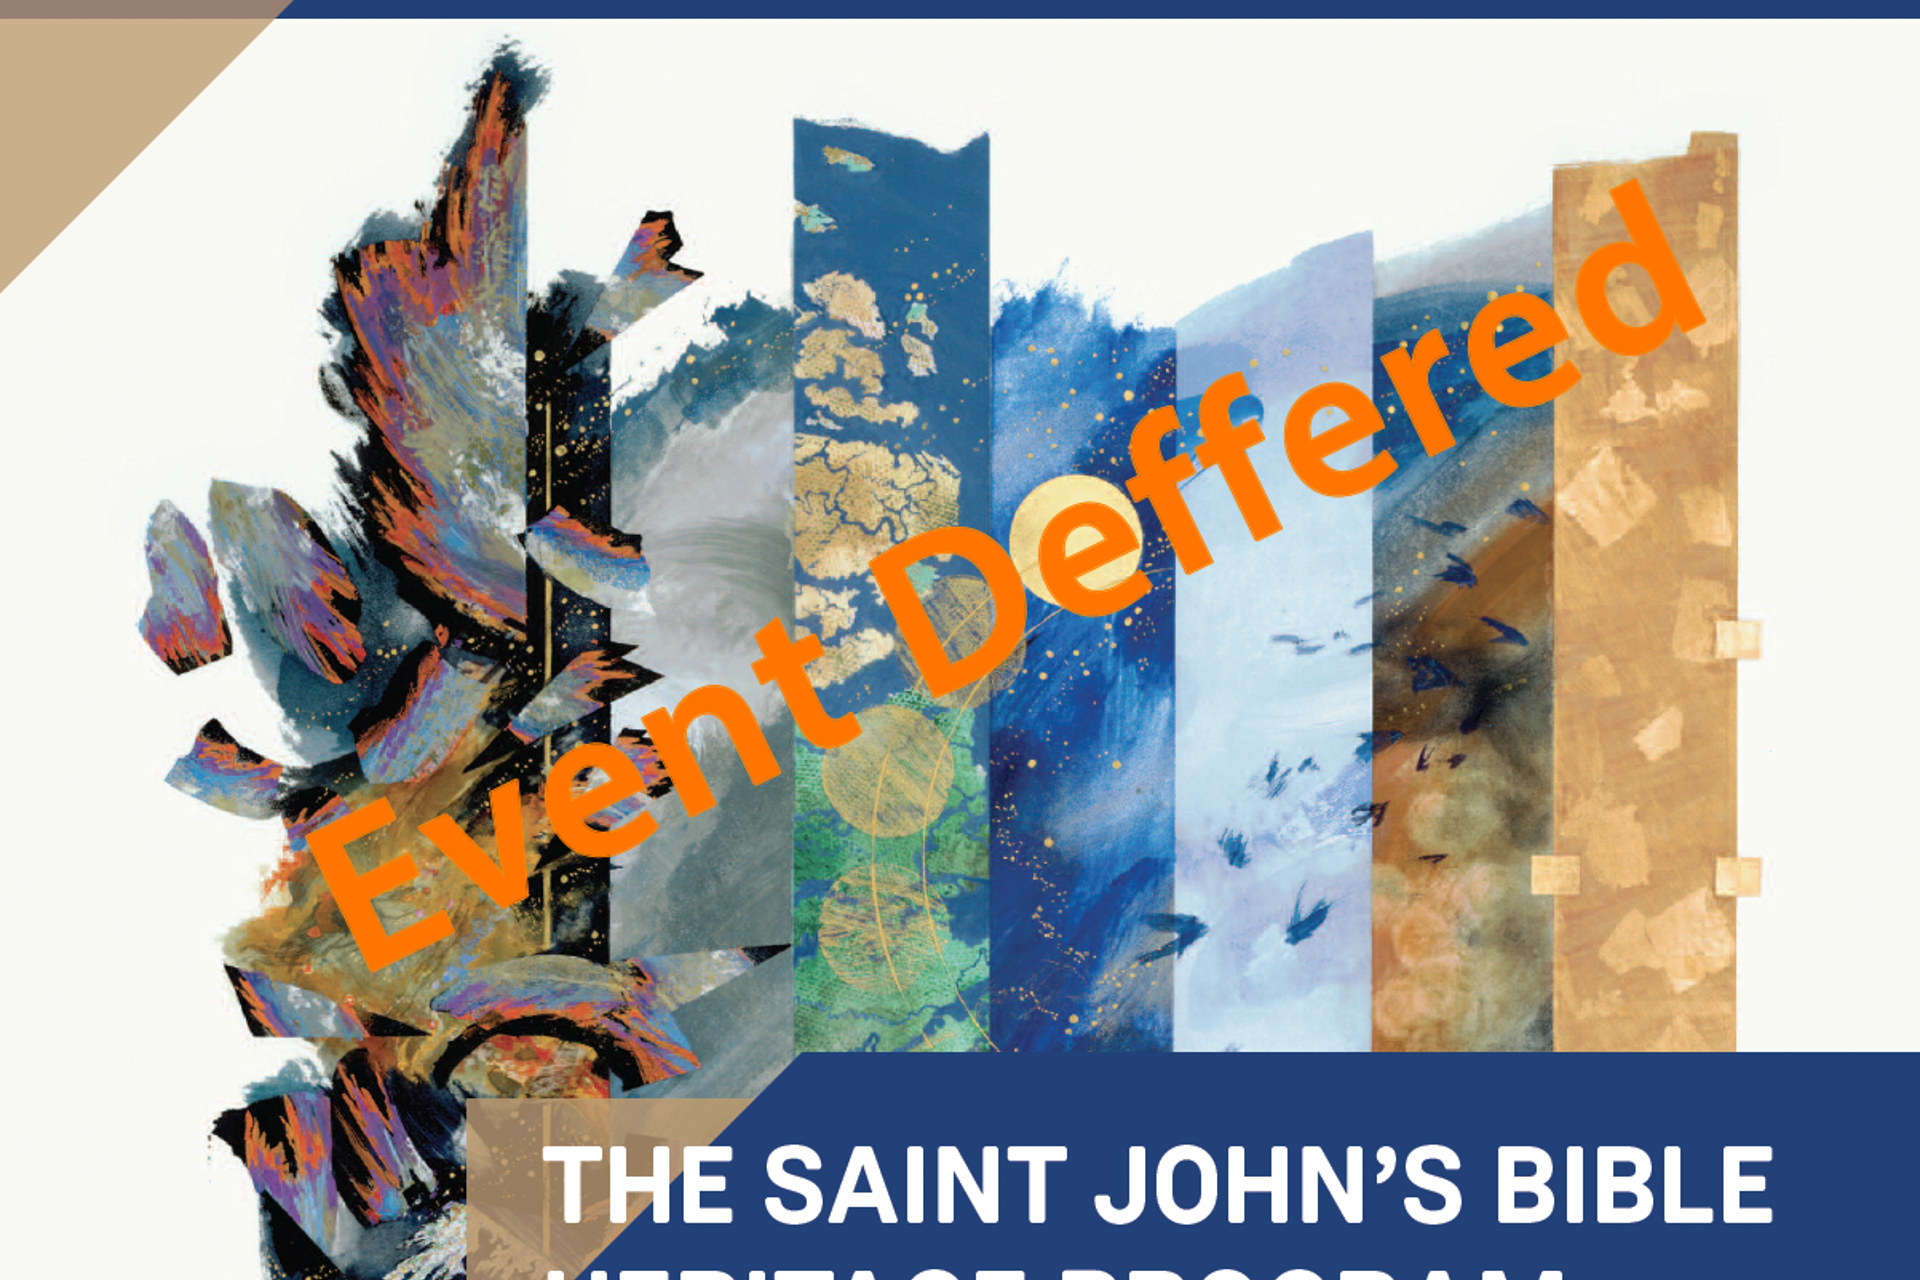 St John's Bible event Deferred